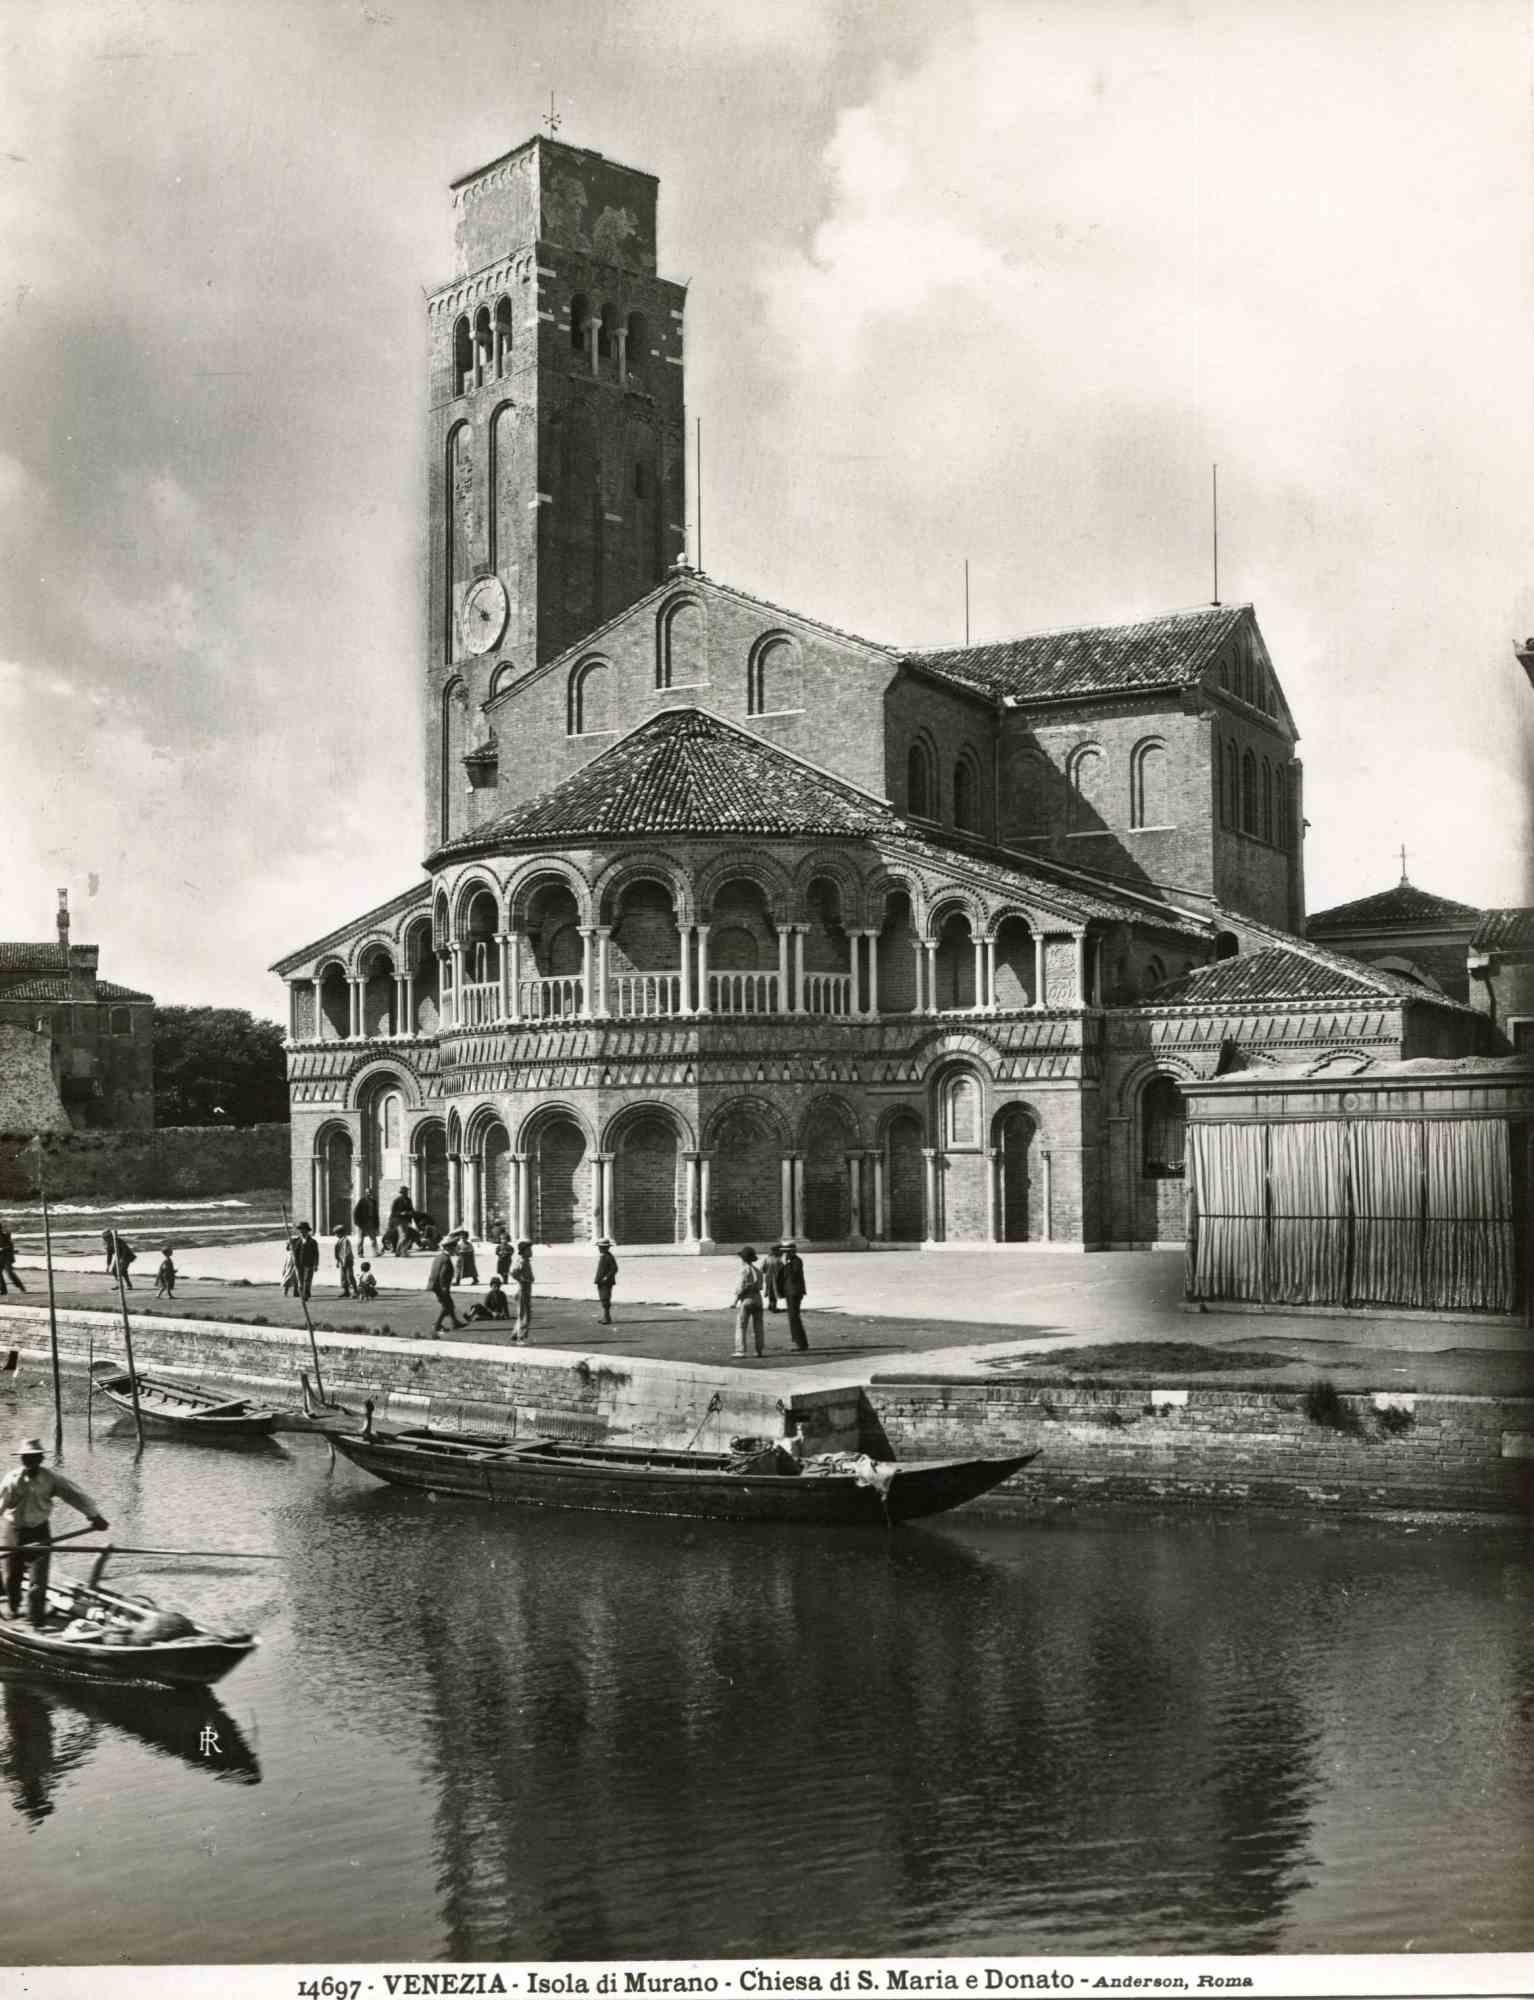 Osvaldo Böhm Black and White Photograph - Vintage View of Murano - Vintage b/w Photo by Osvaldo Bohm - Early 20th Century